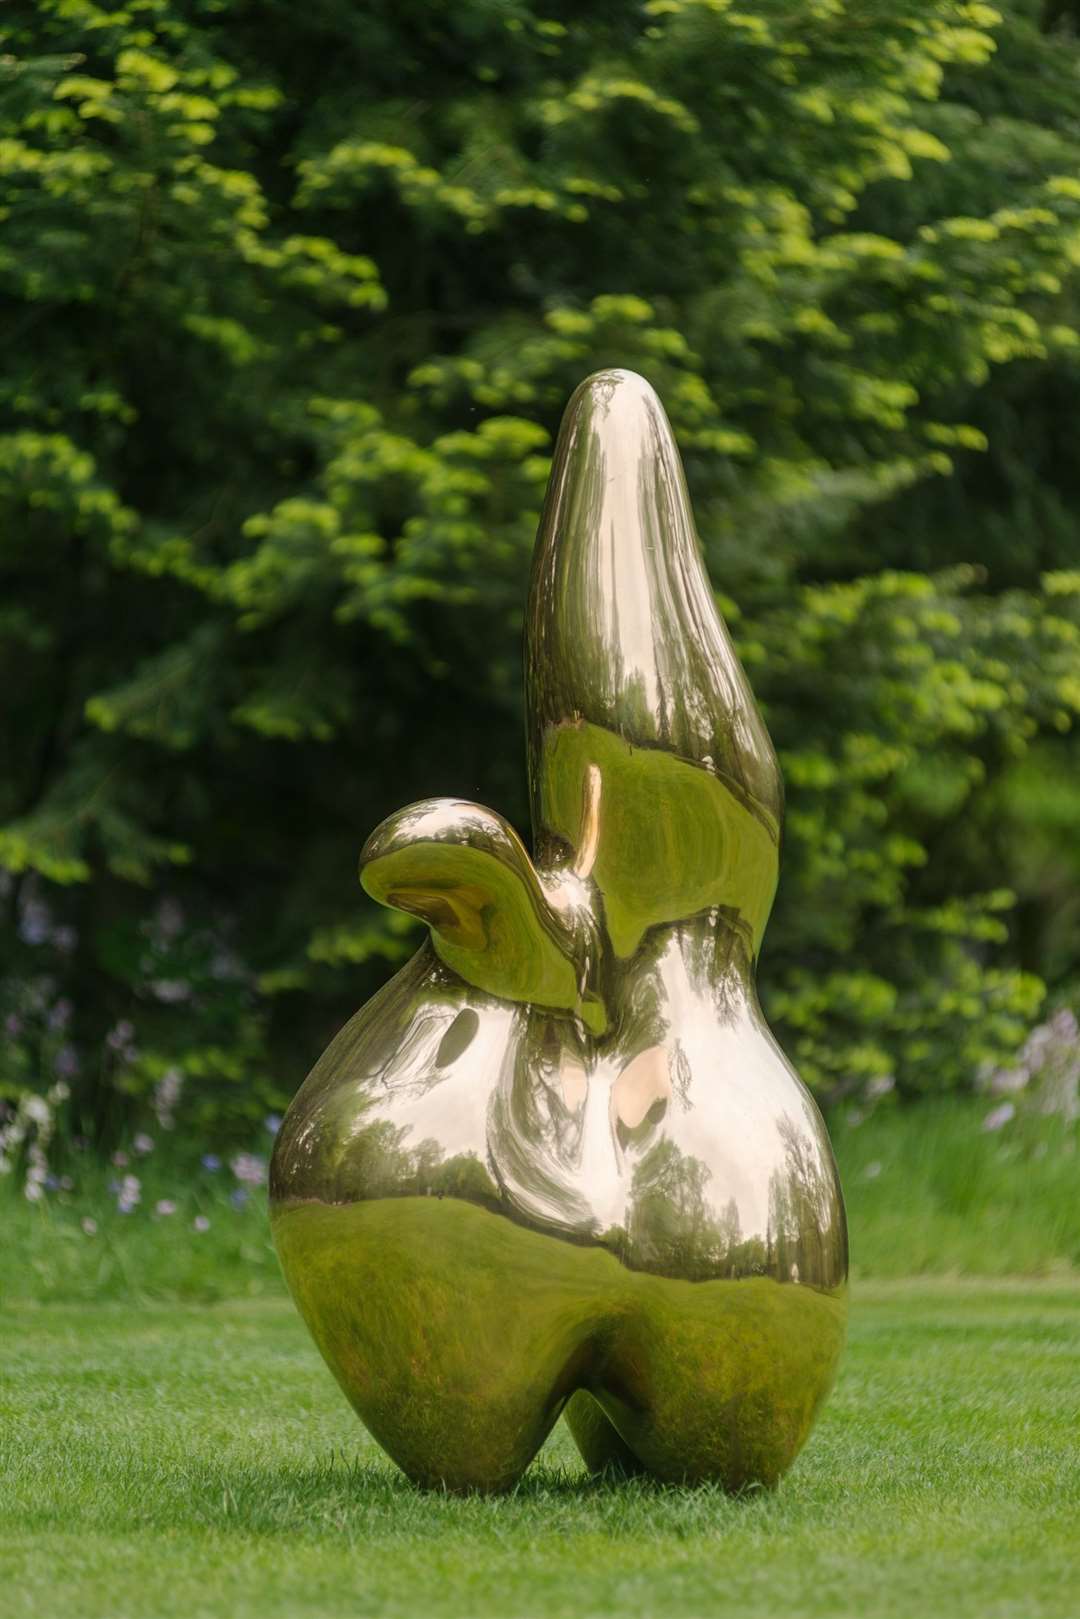 Jean Arp, Berger de nuages. This sculpture is exclusive to the Kröller-Müller Museum